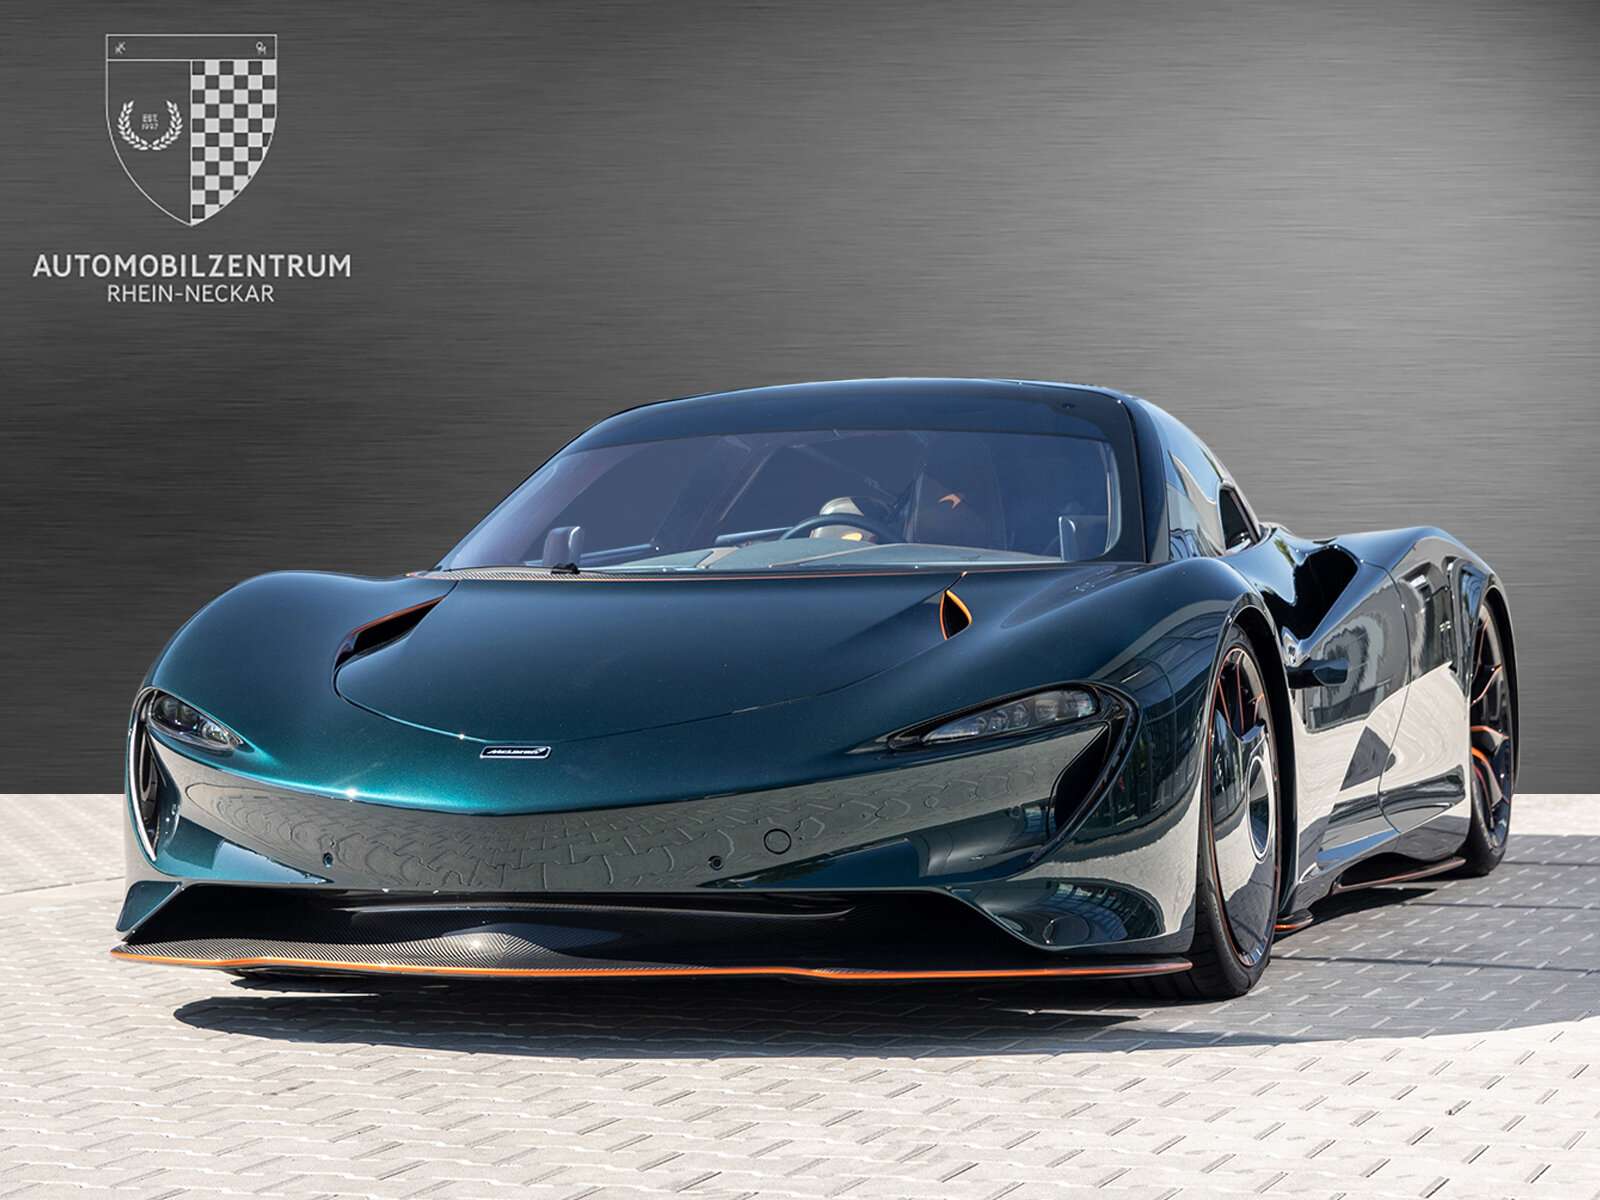 McLaren Speedtail Coupe in Green used in Viernheim for € 3,849,000.-